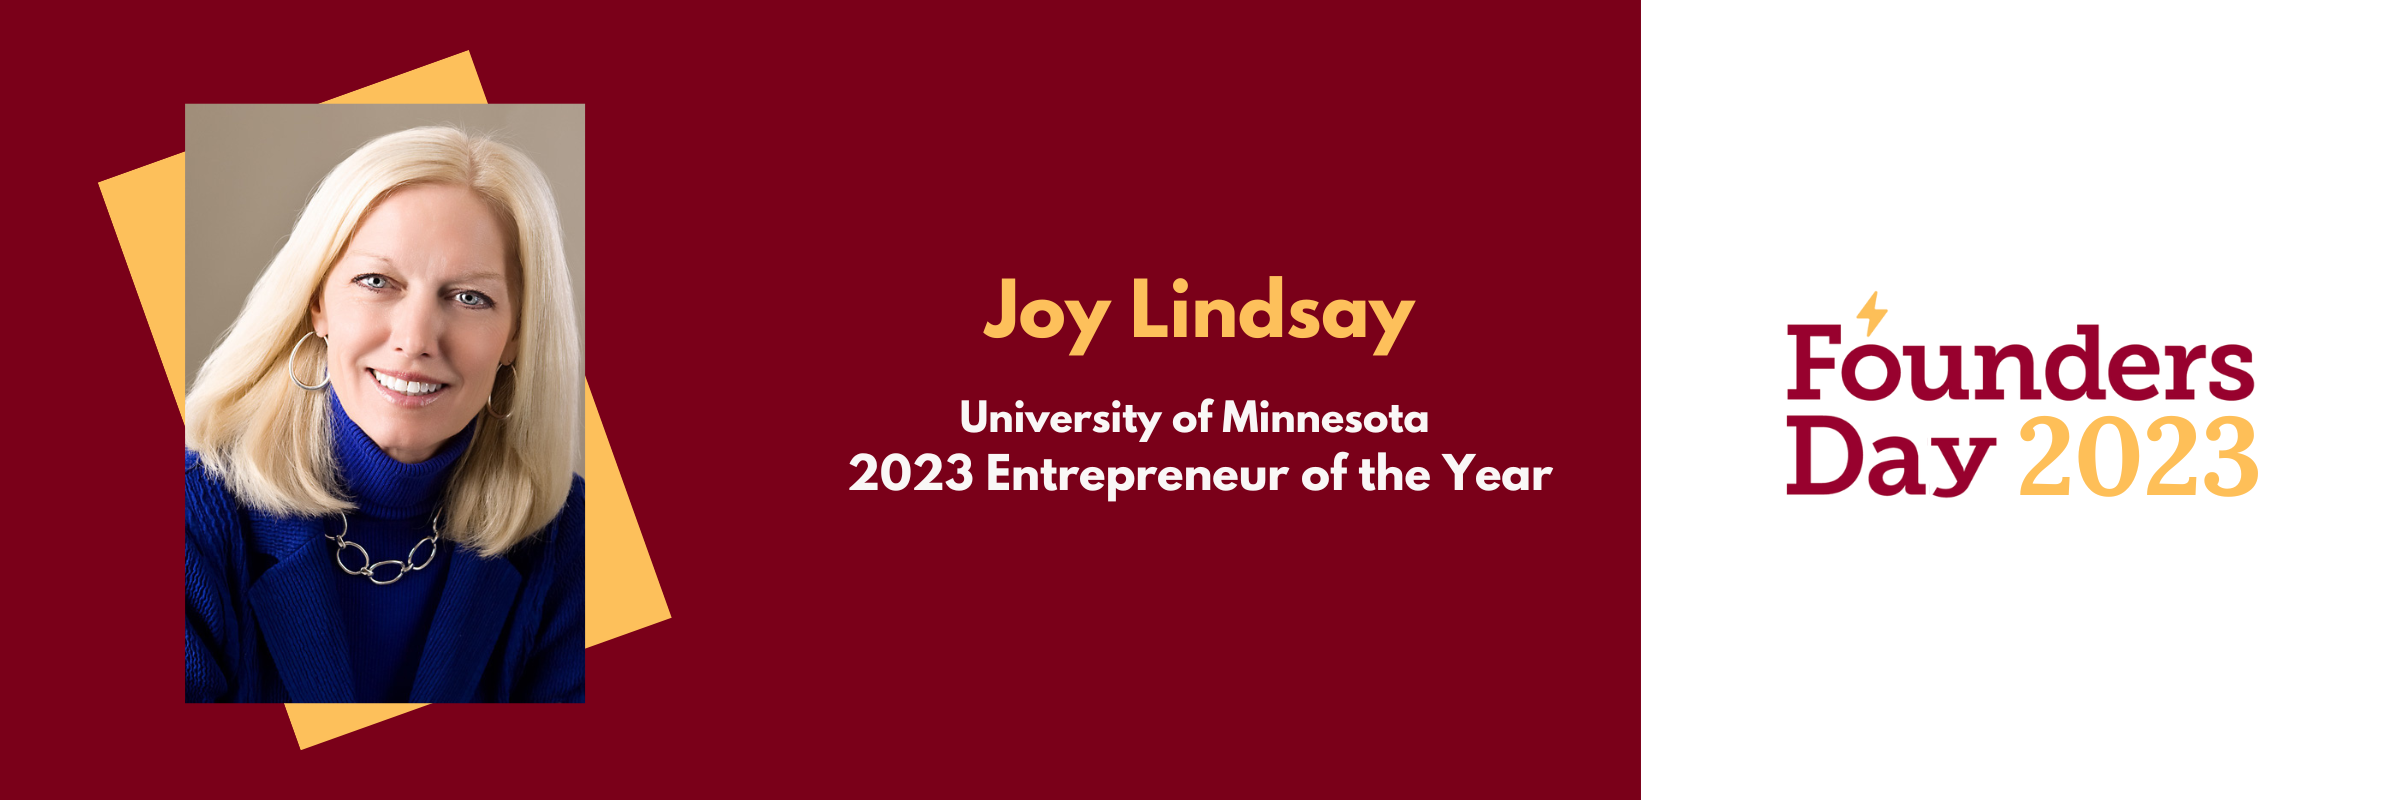 Founders Day 2023: Joy Lindsay University of Minnesota 2023 Entrepreneur of the Year